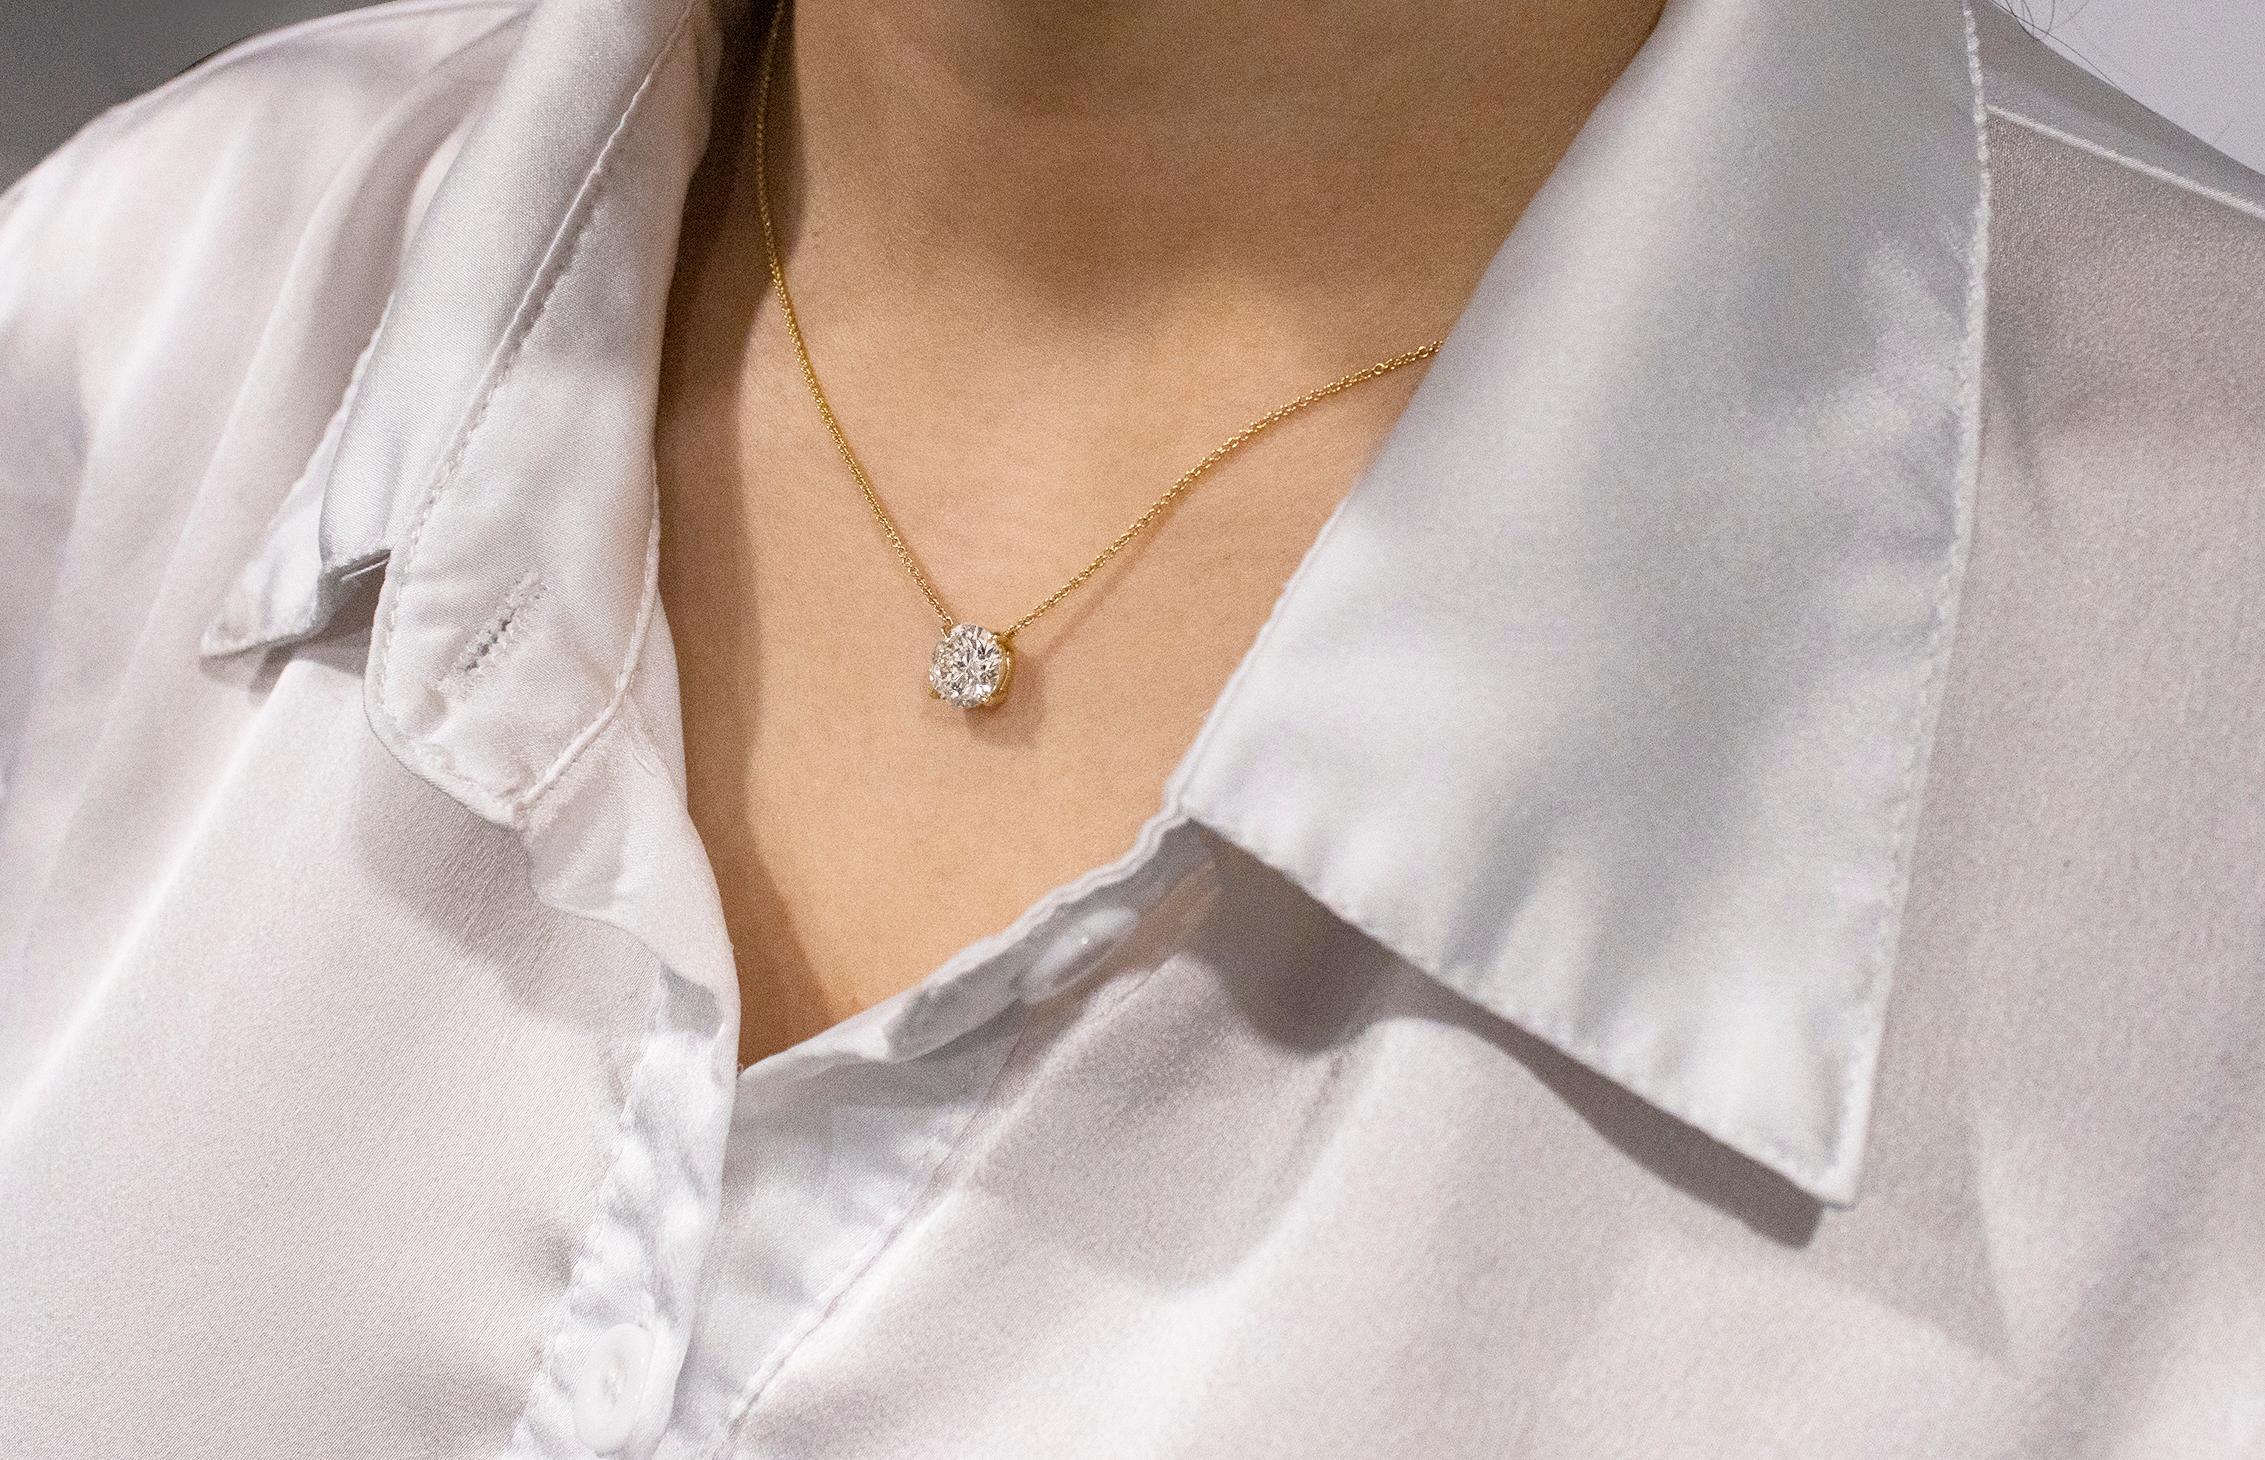 Roman Malakov 2.01 Carats Brilliant Round Diamond Solitaire Pendant Necklace In New Condition For Sale In New York, NY